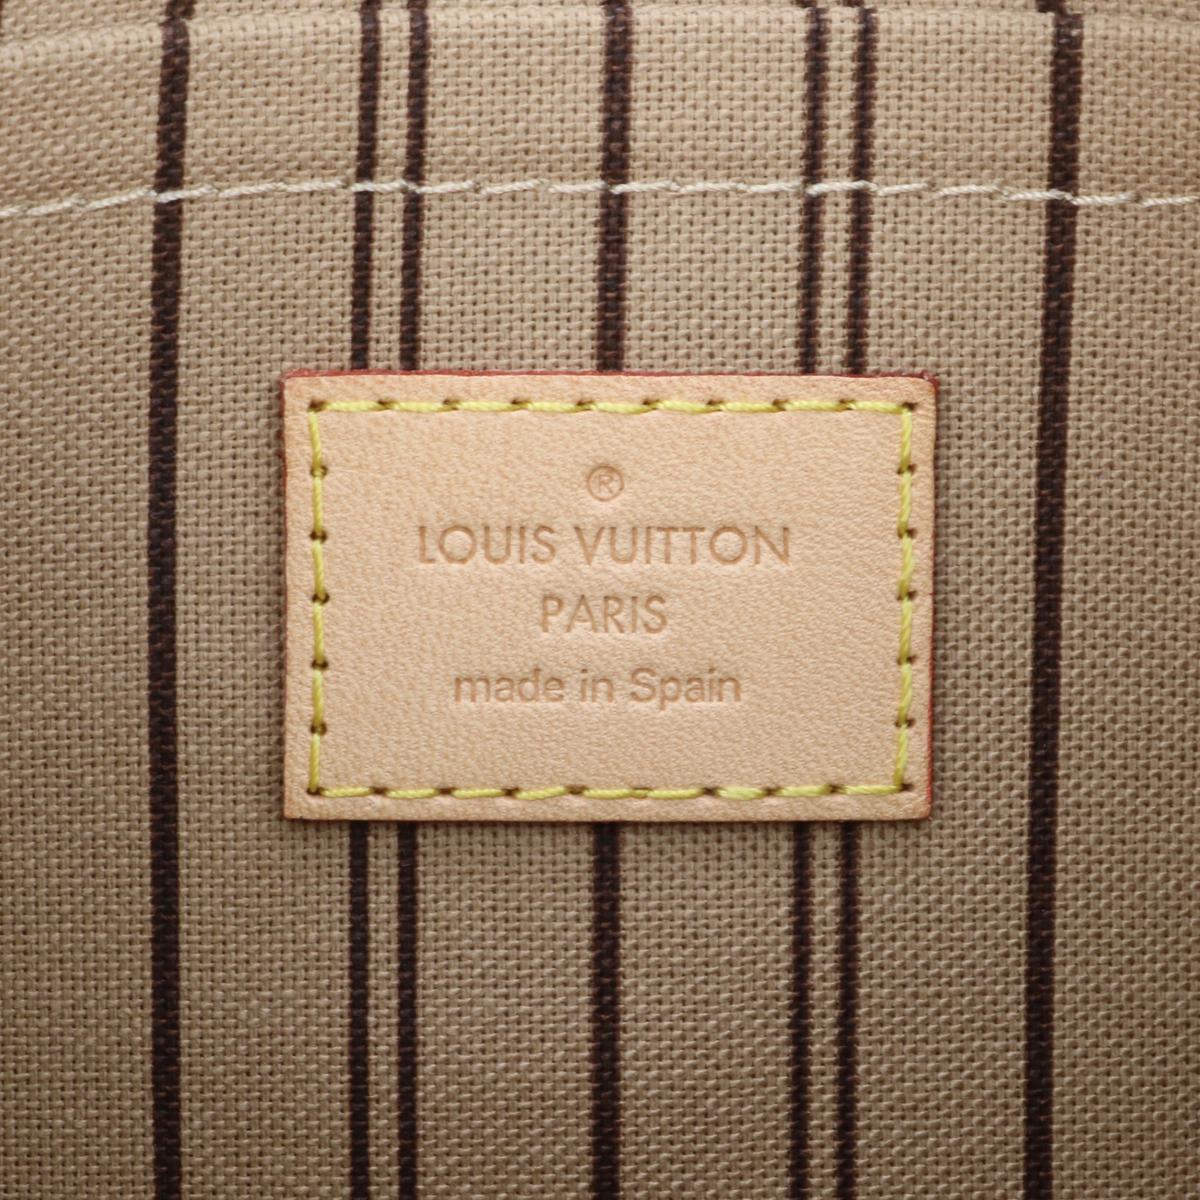 Louis Vuitton Neverfull MM Pochette Pouch in Monogram with Beige Interior 2018 10